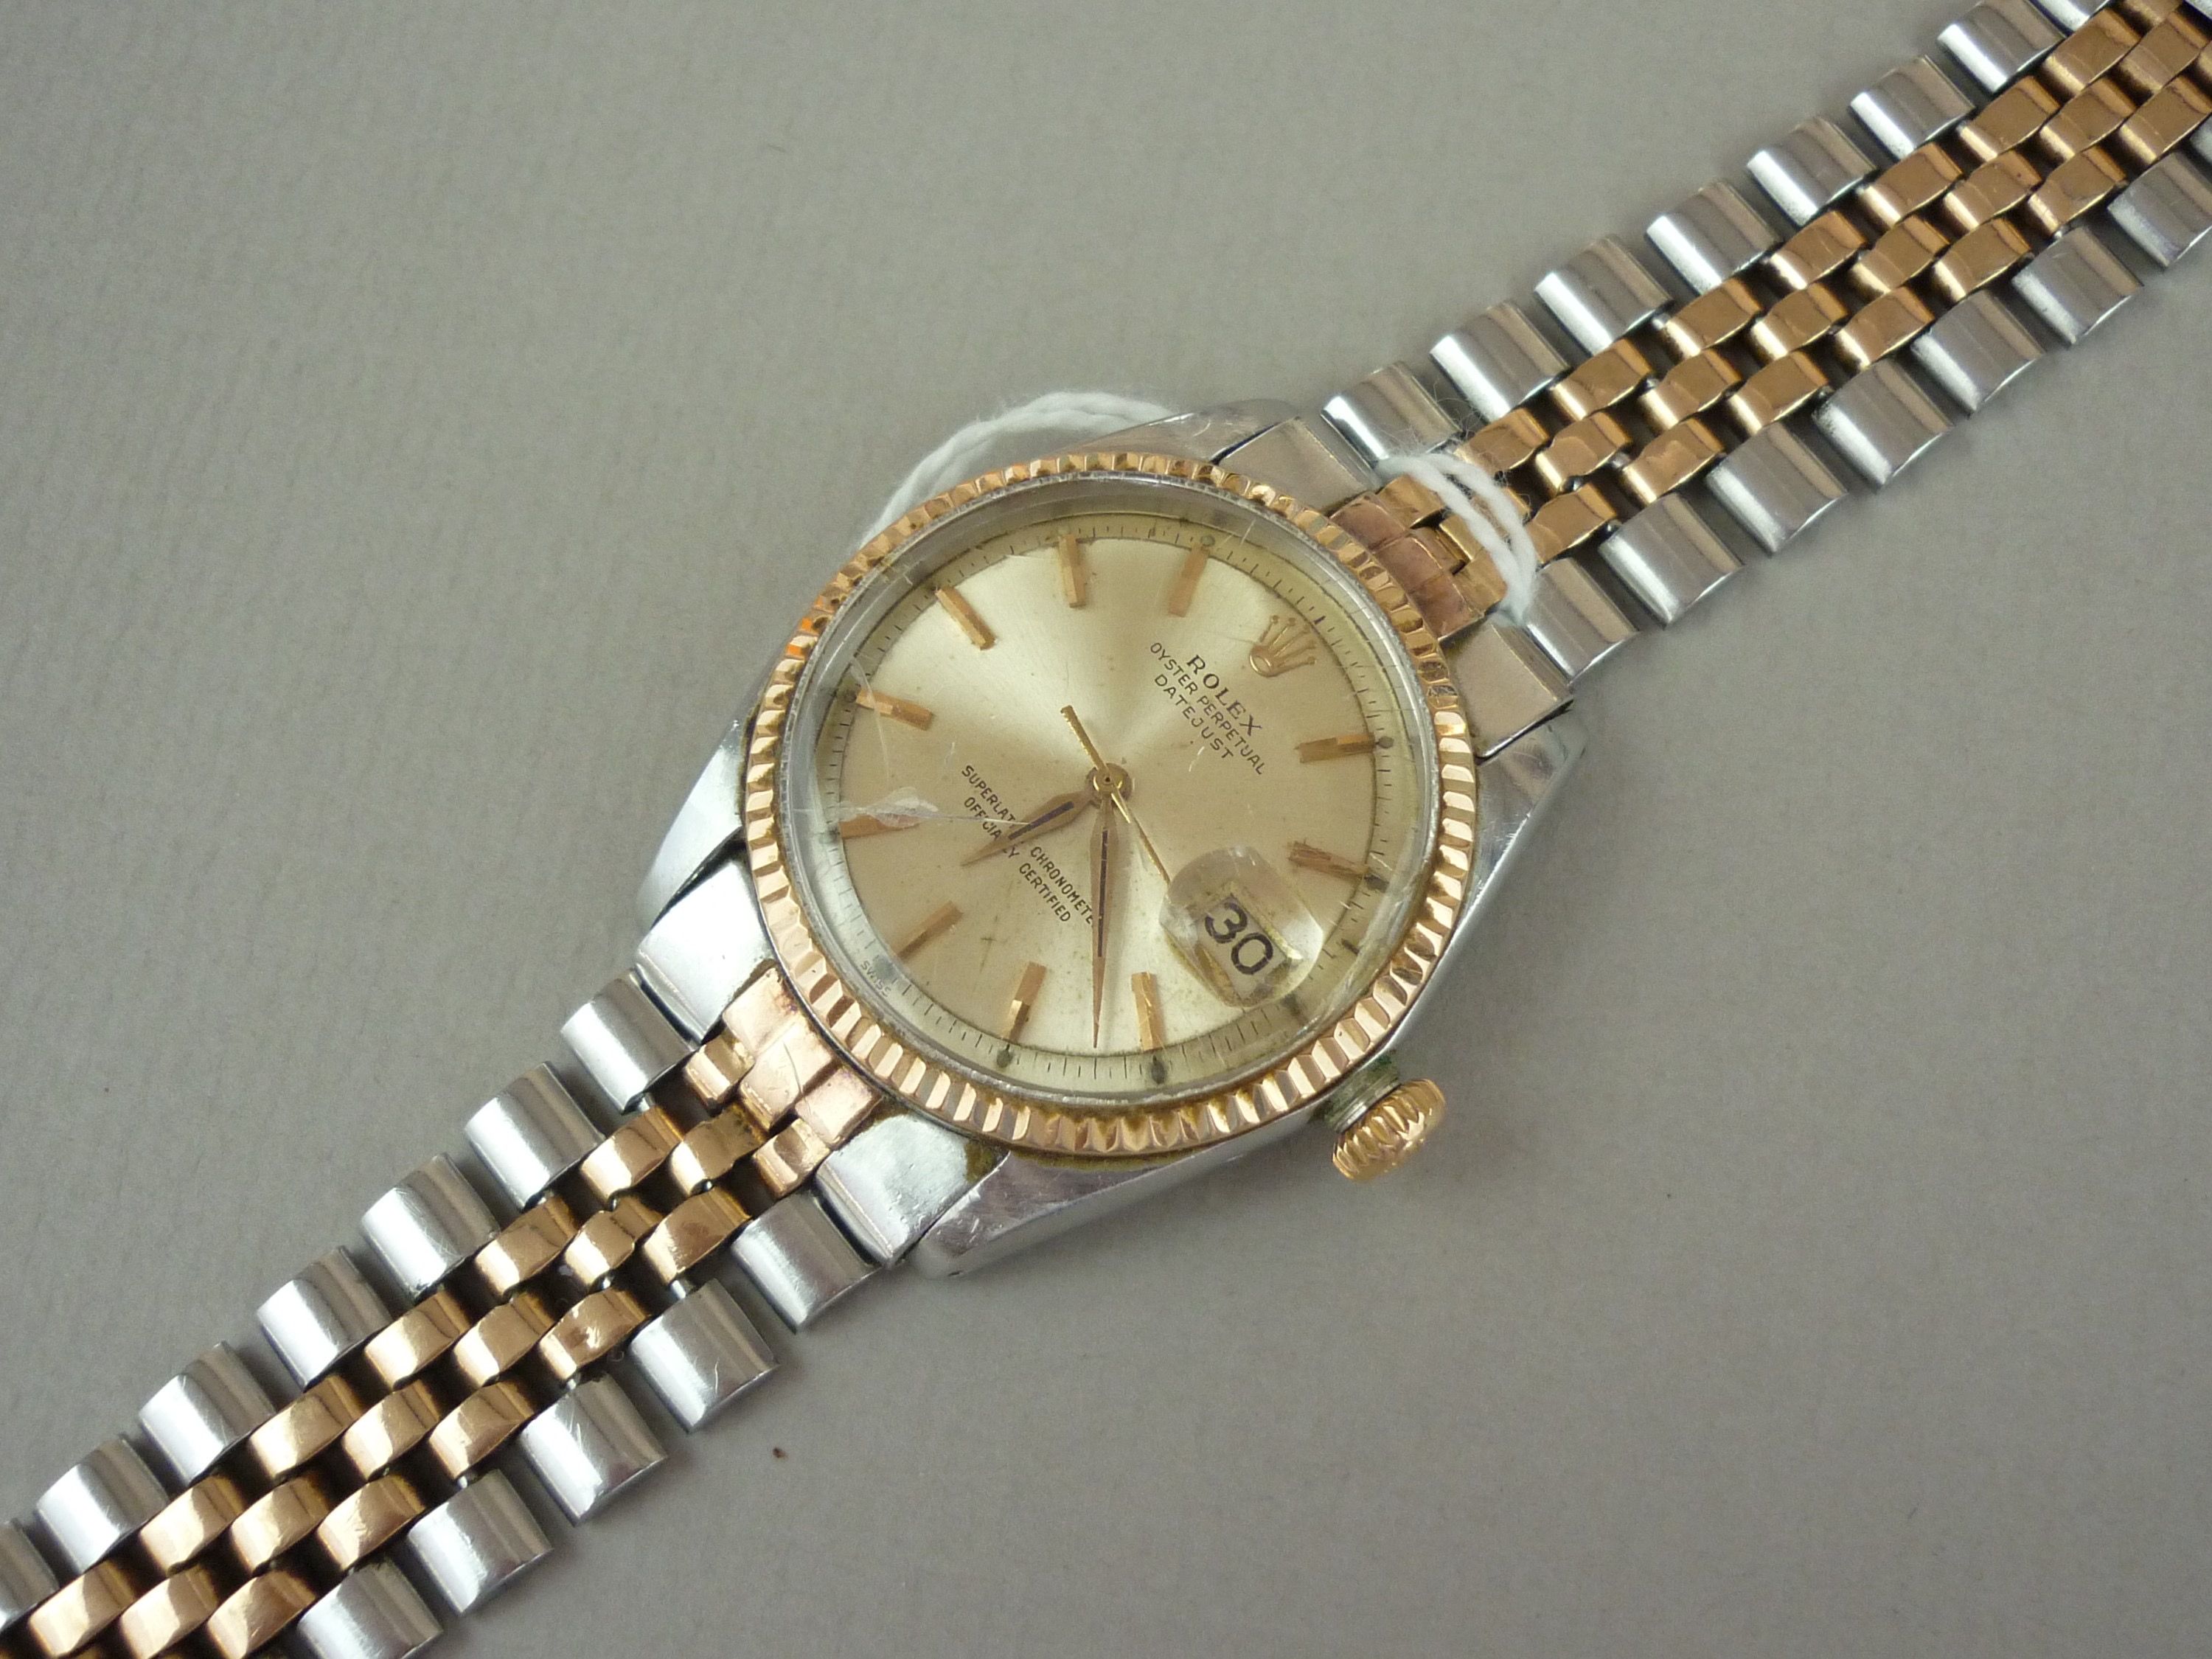 A Rolex bi-metallic Oyster Perpetual Datejust wrist watch, with Jubilee bracelet strap, 1958 or